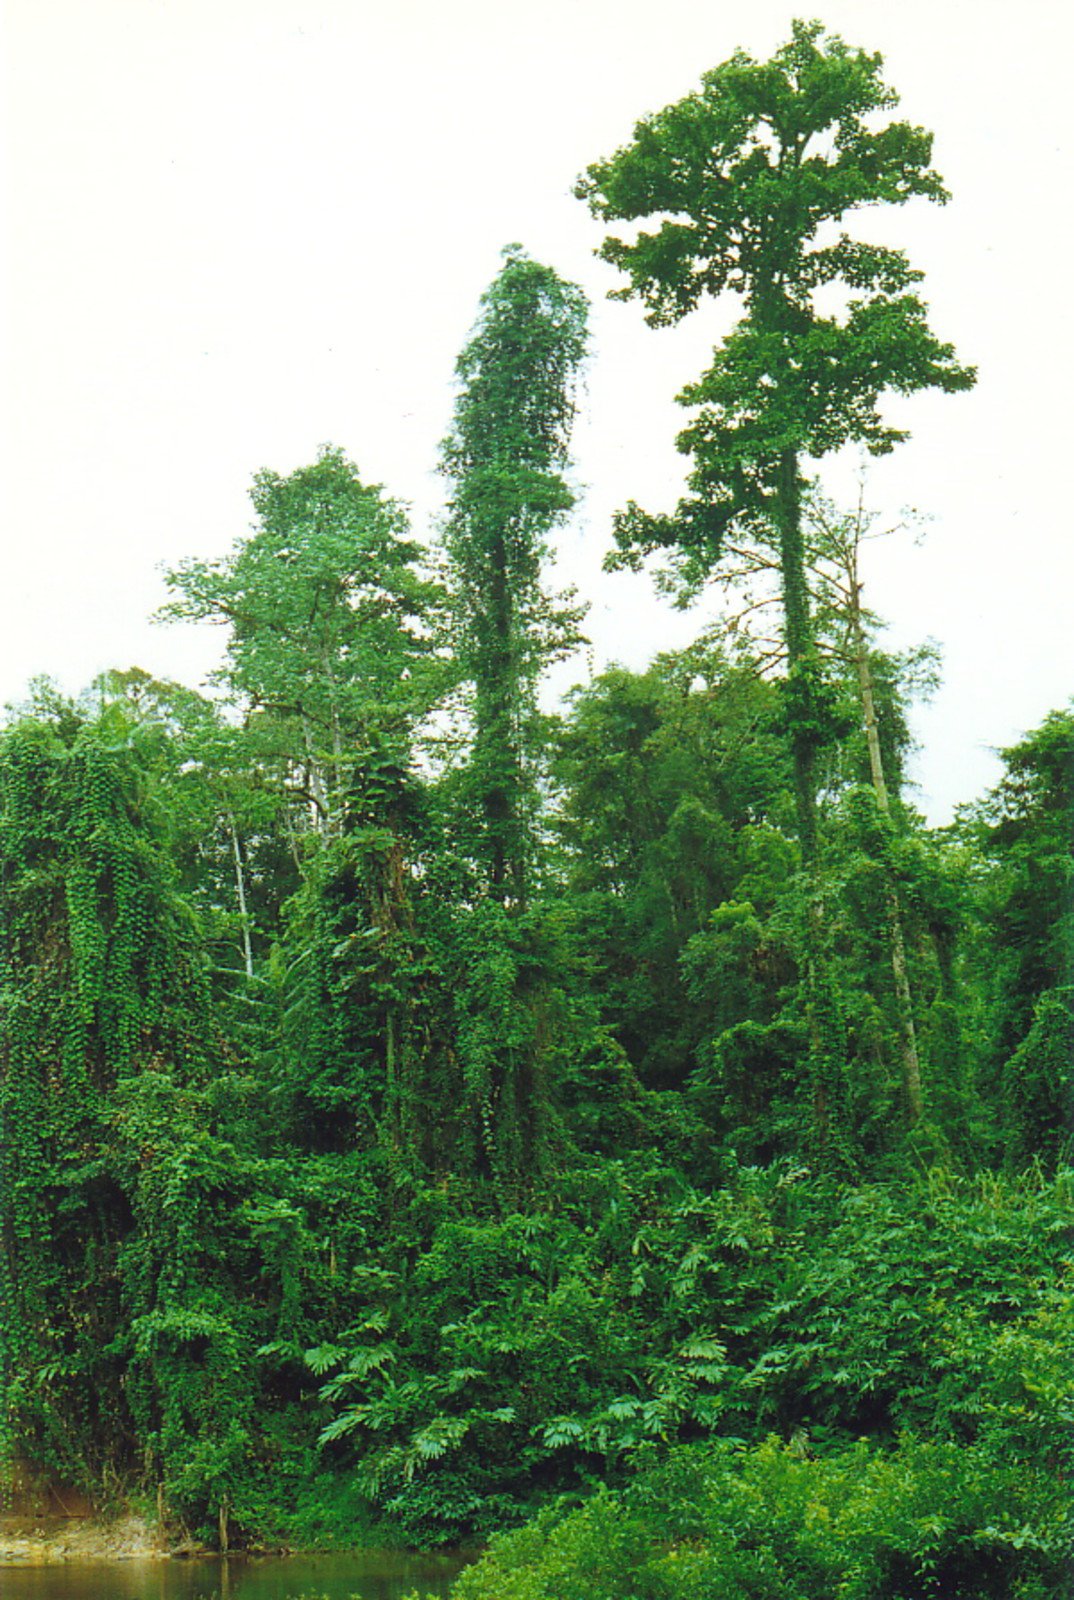 The rainforest near Kuala Perkai